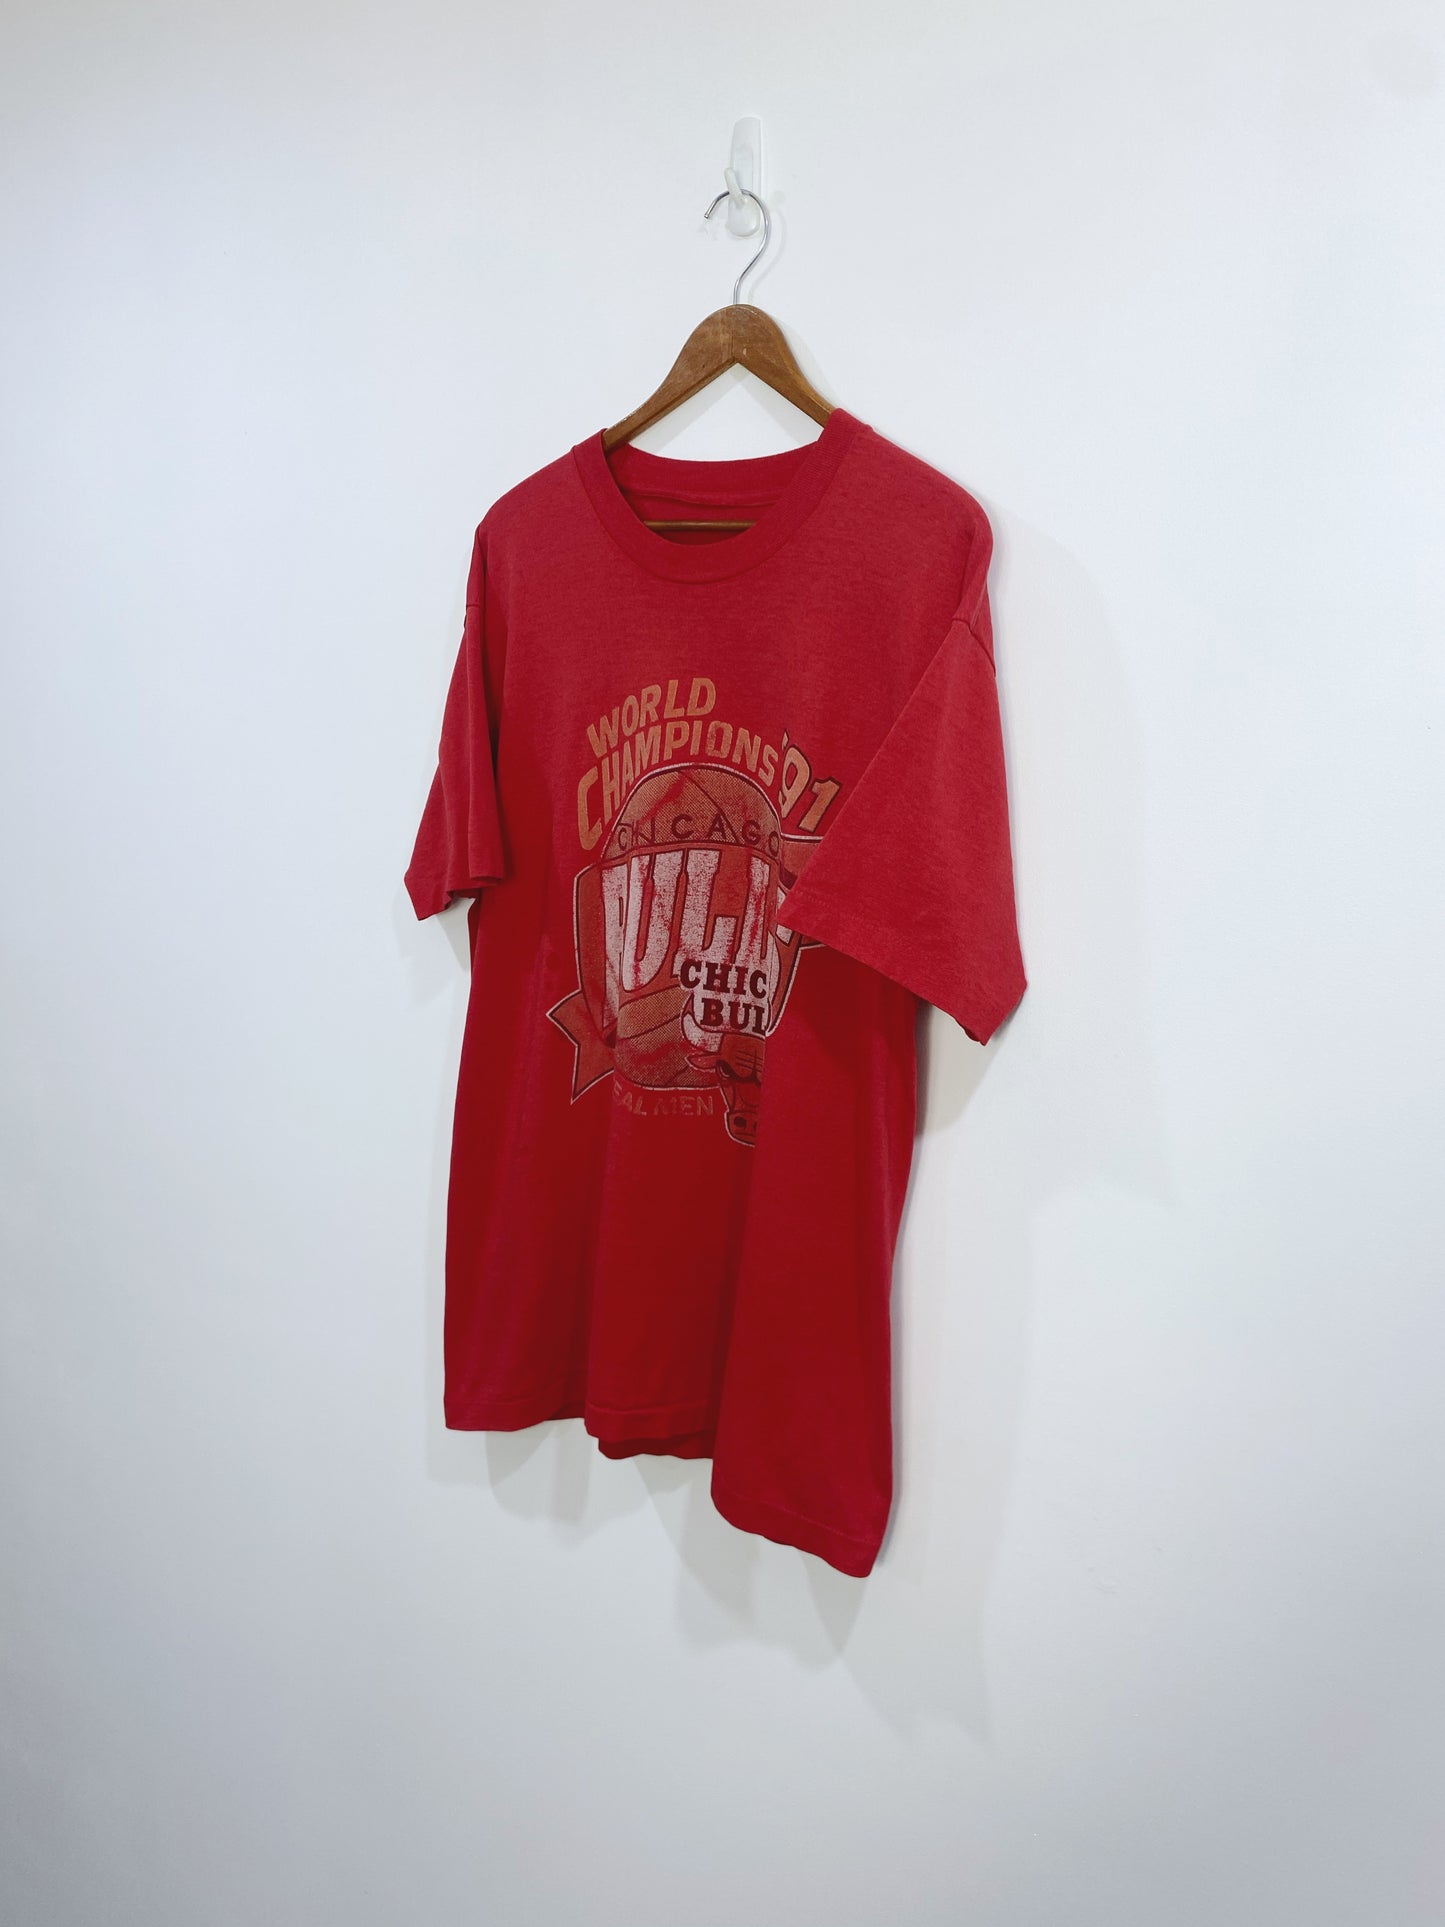 Vintage 1991 Chicago Bulls Championship T-shirt L